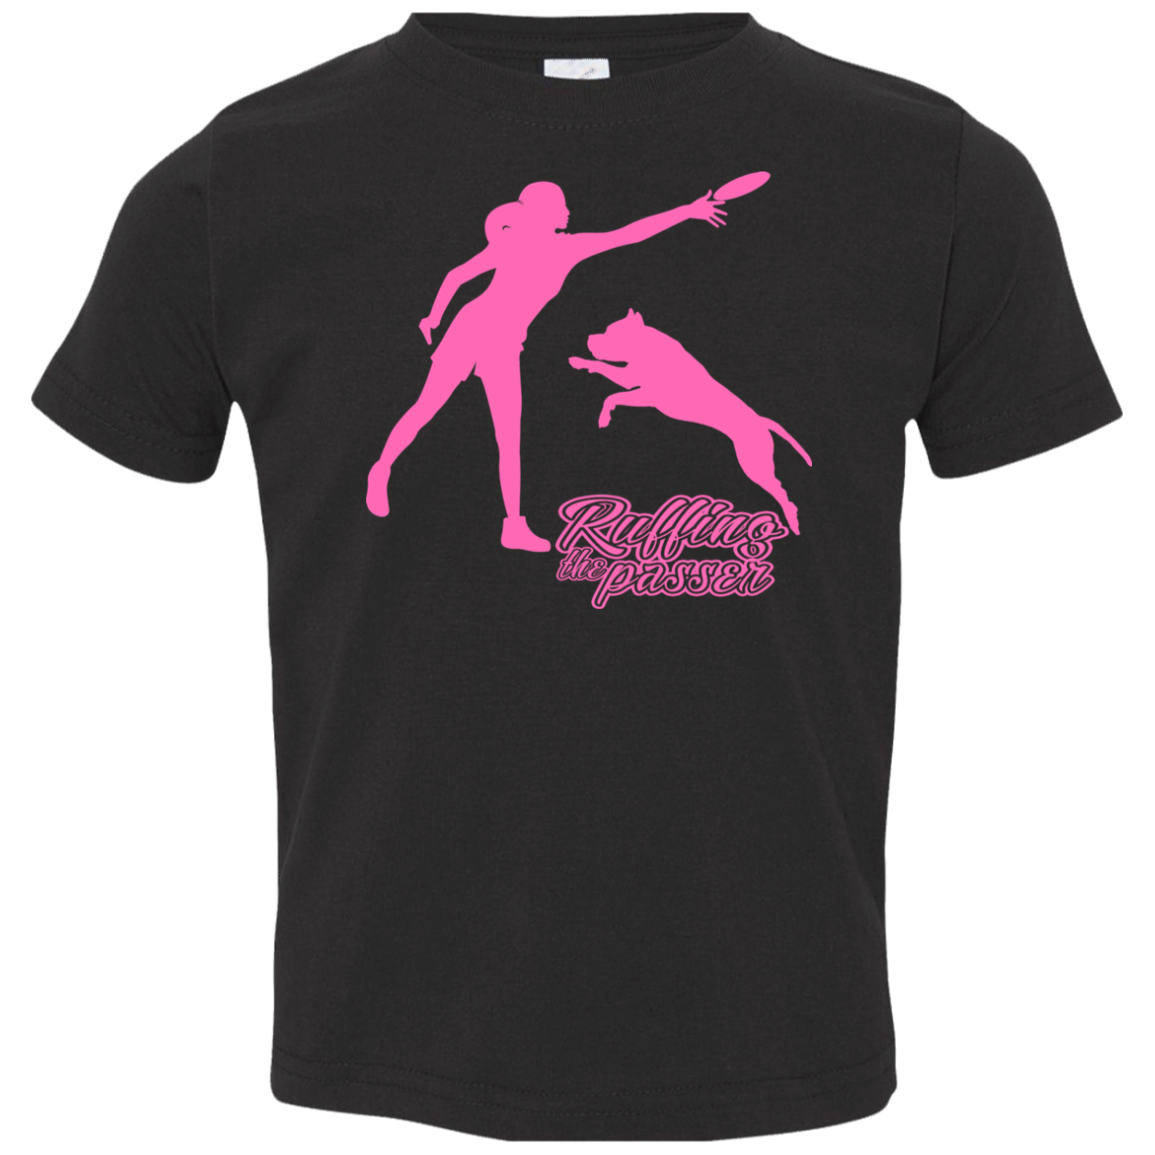 ArtichokeUSA Custom Design. Ruffing the Passer. Pitbull Edition. Female Version. Toddler Jersey T-Shirt